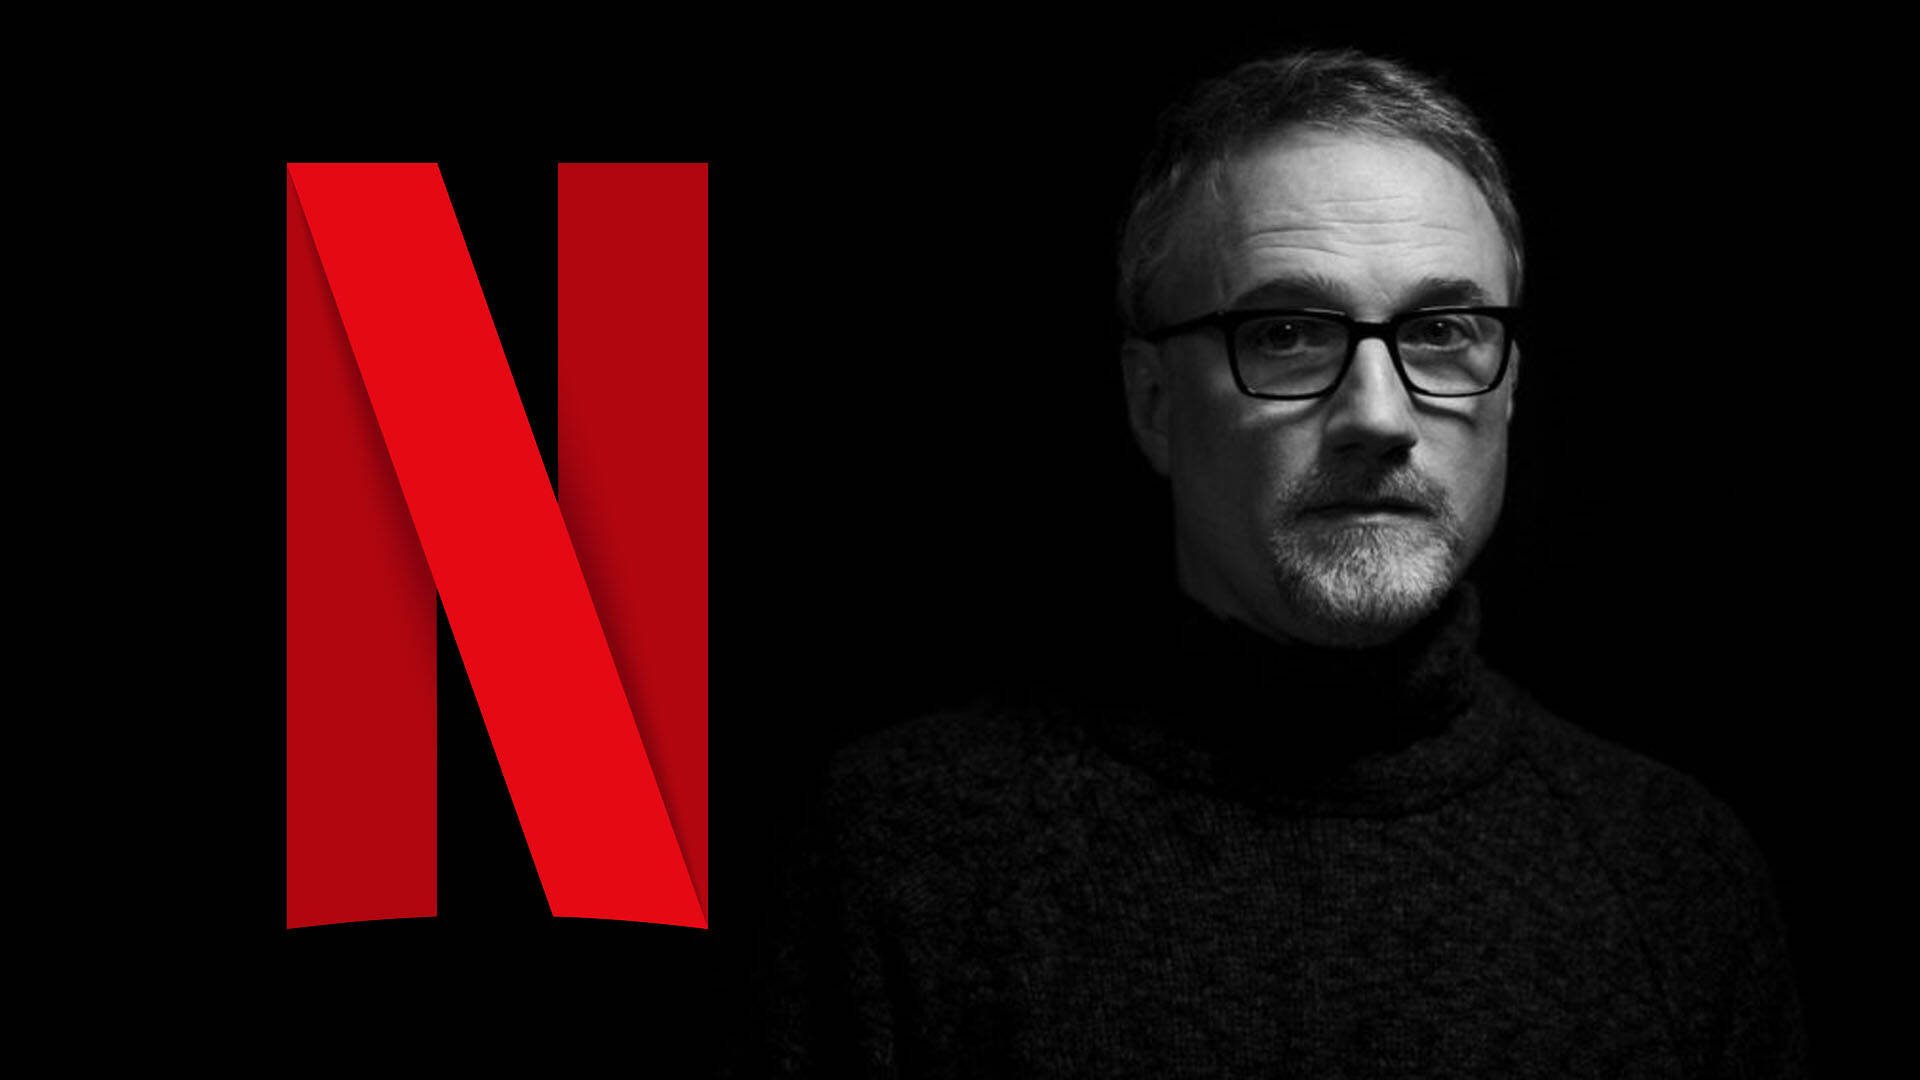 David Fincher sarà il regista del remake de "L'altro uomo" per Netflix